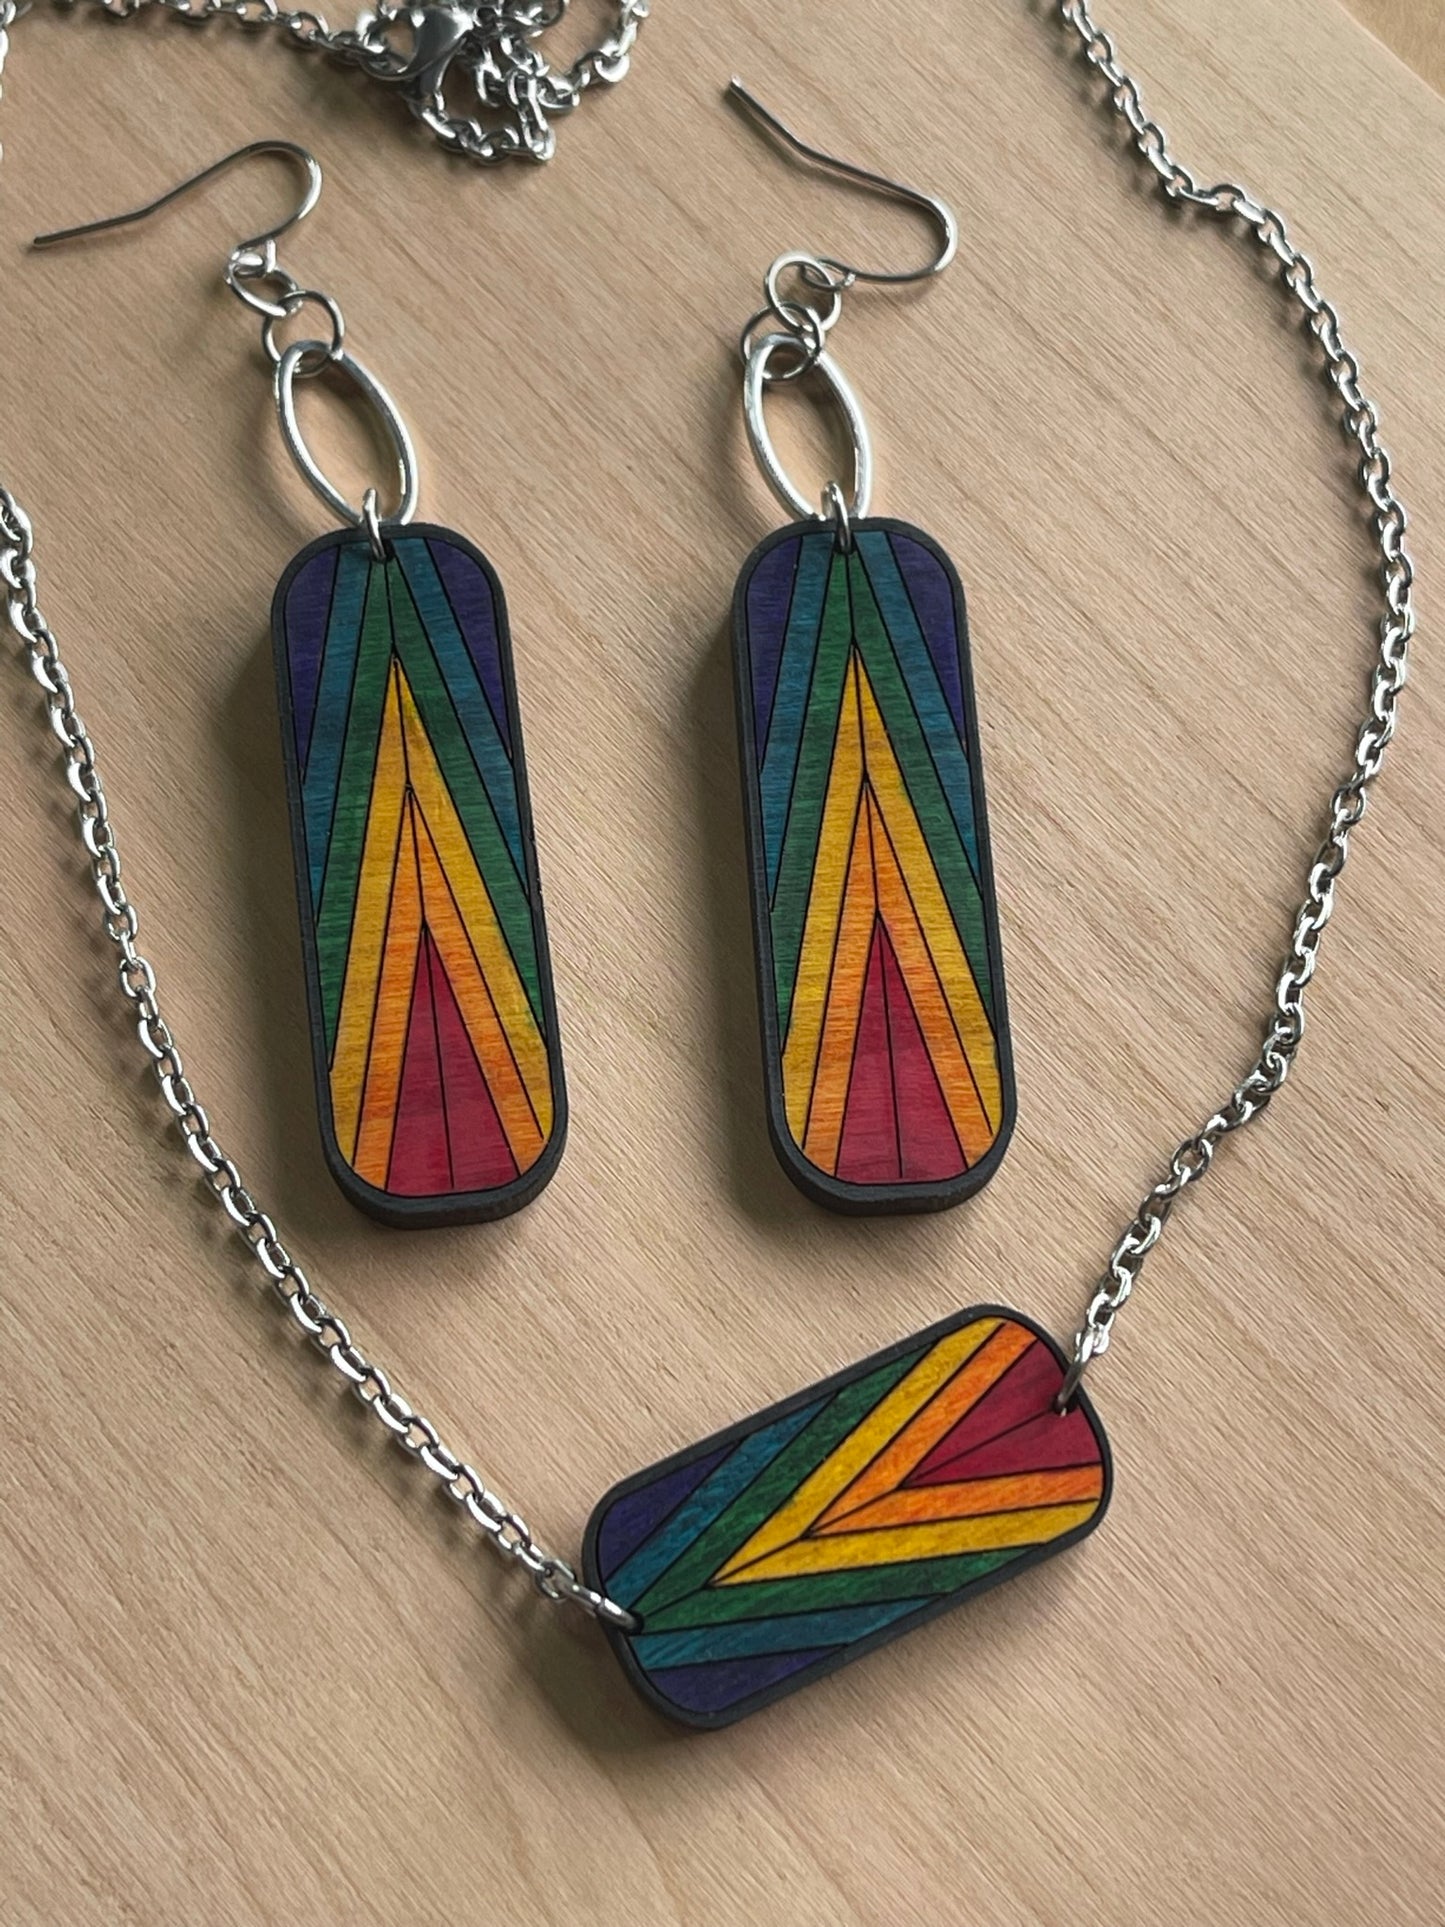 Chevron Rainbow - Laser cut, hand painted chevron earrings.